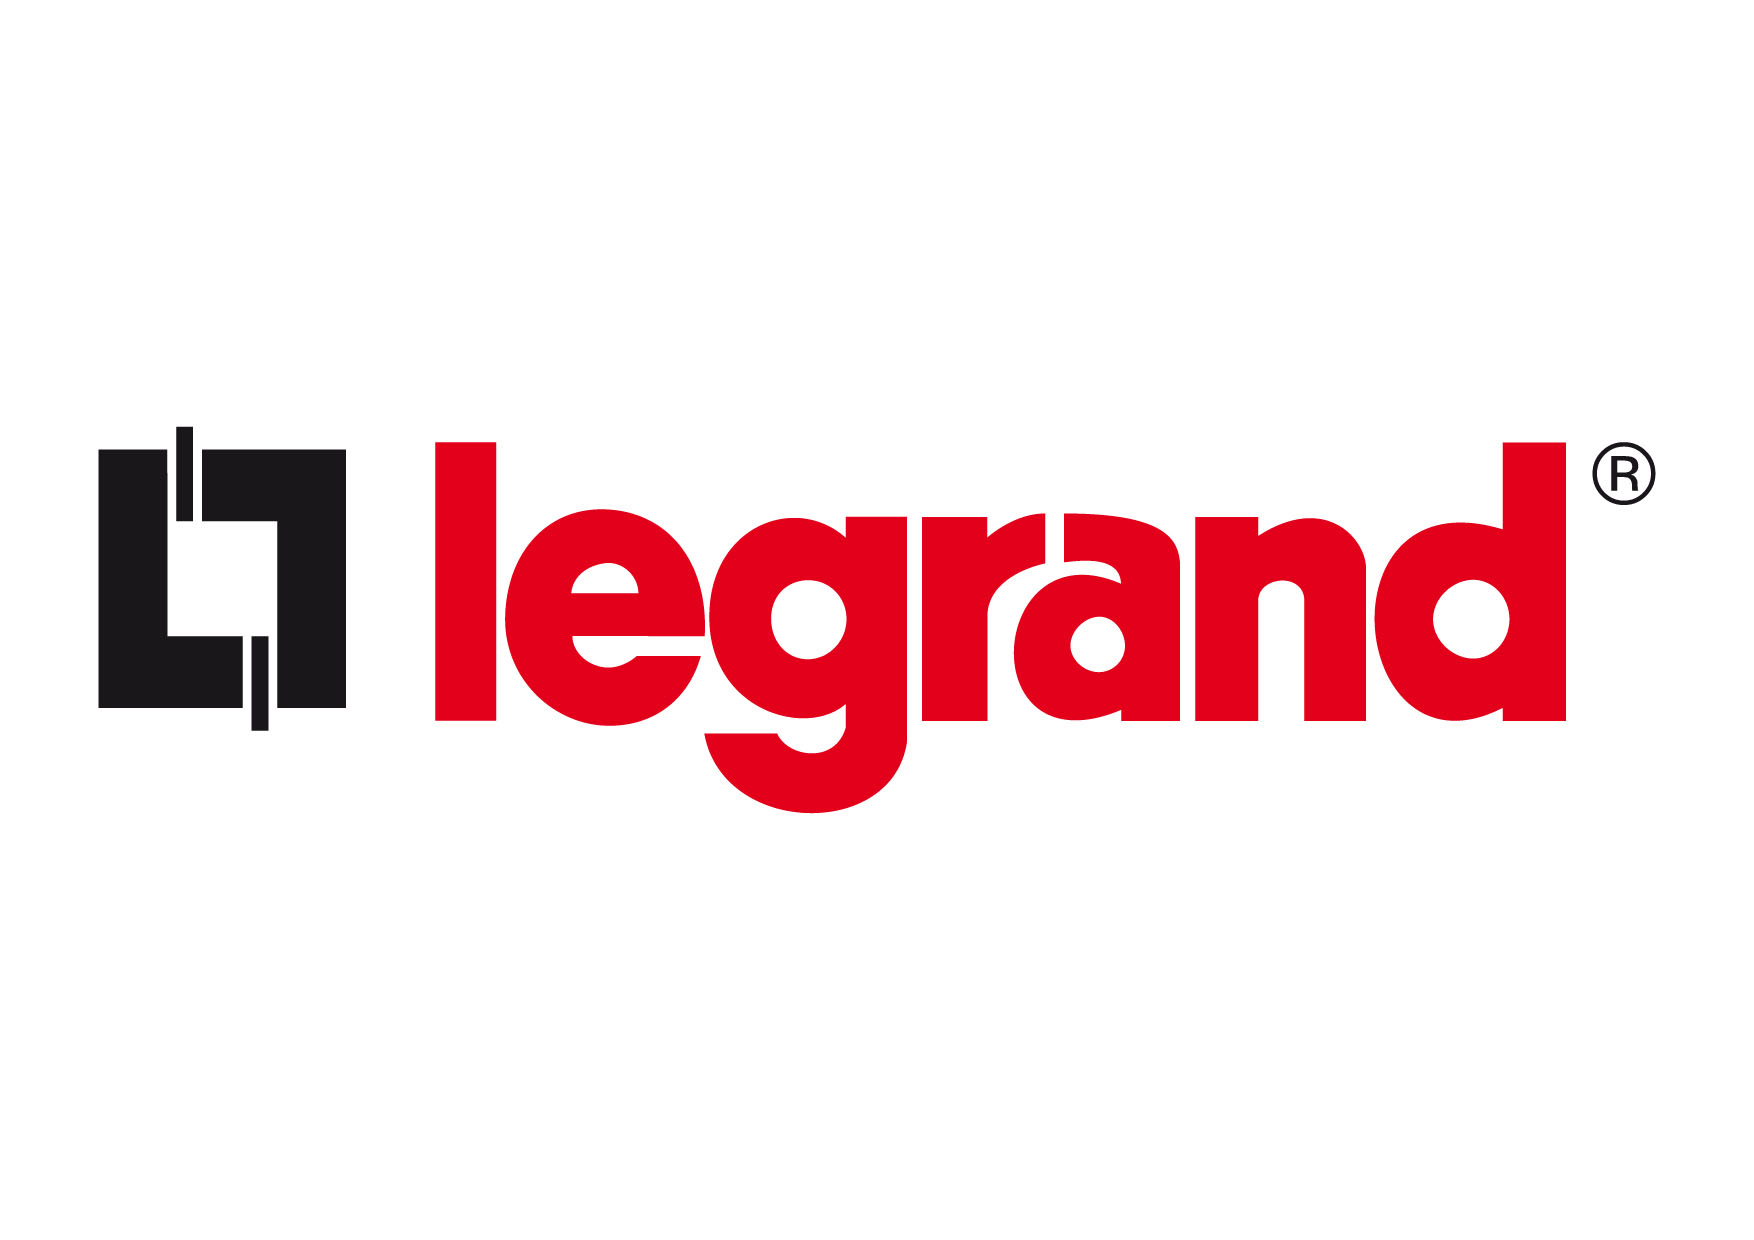 Legrand brands